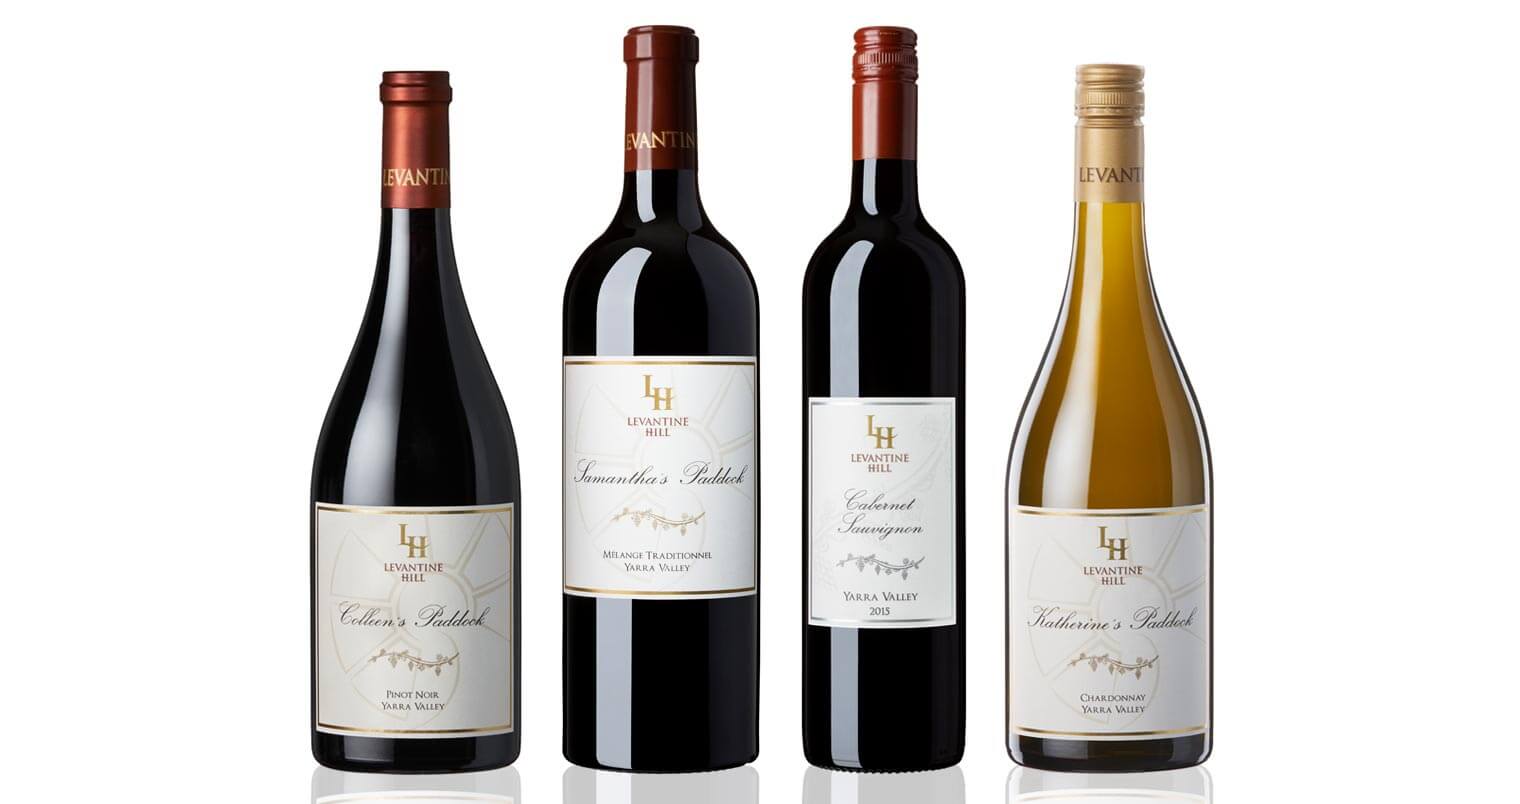 levantine hill estate wines, featured image